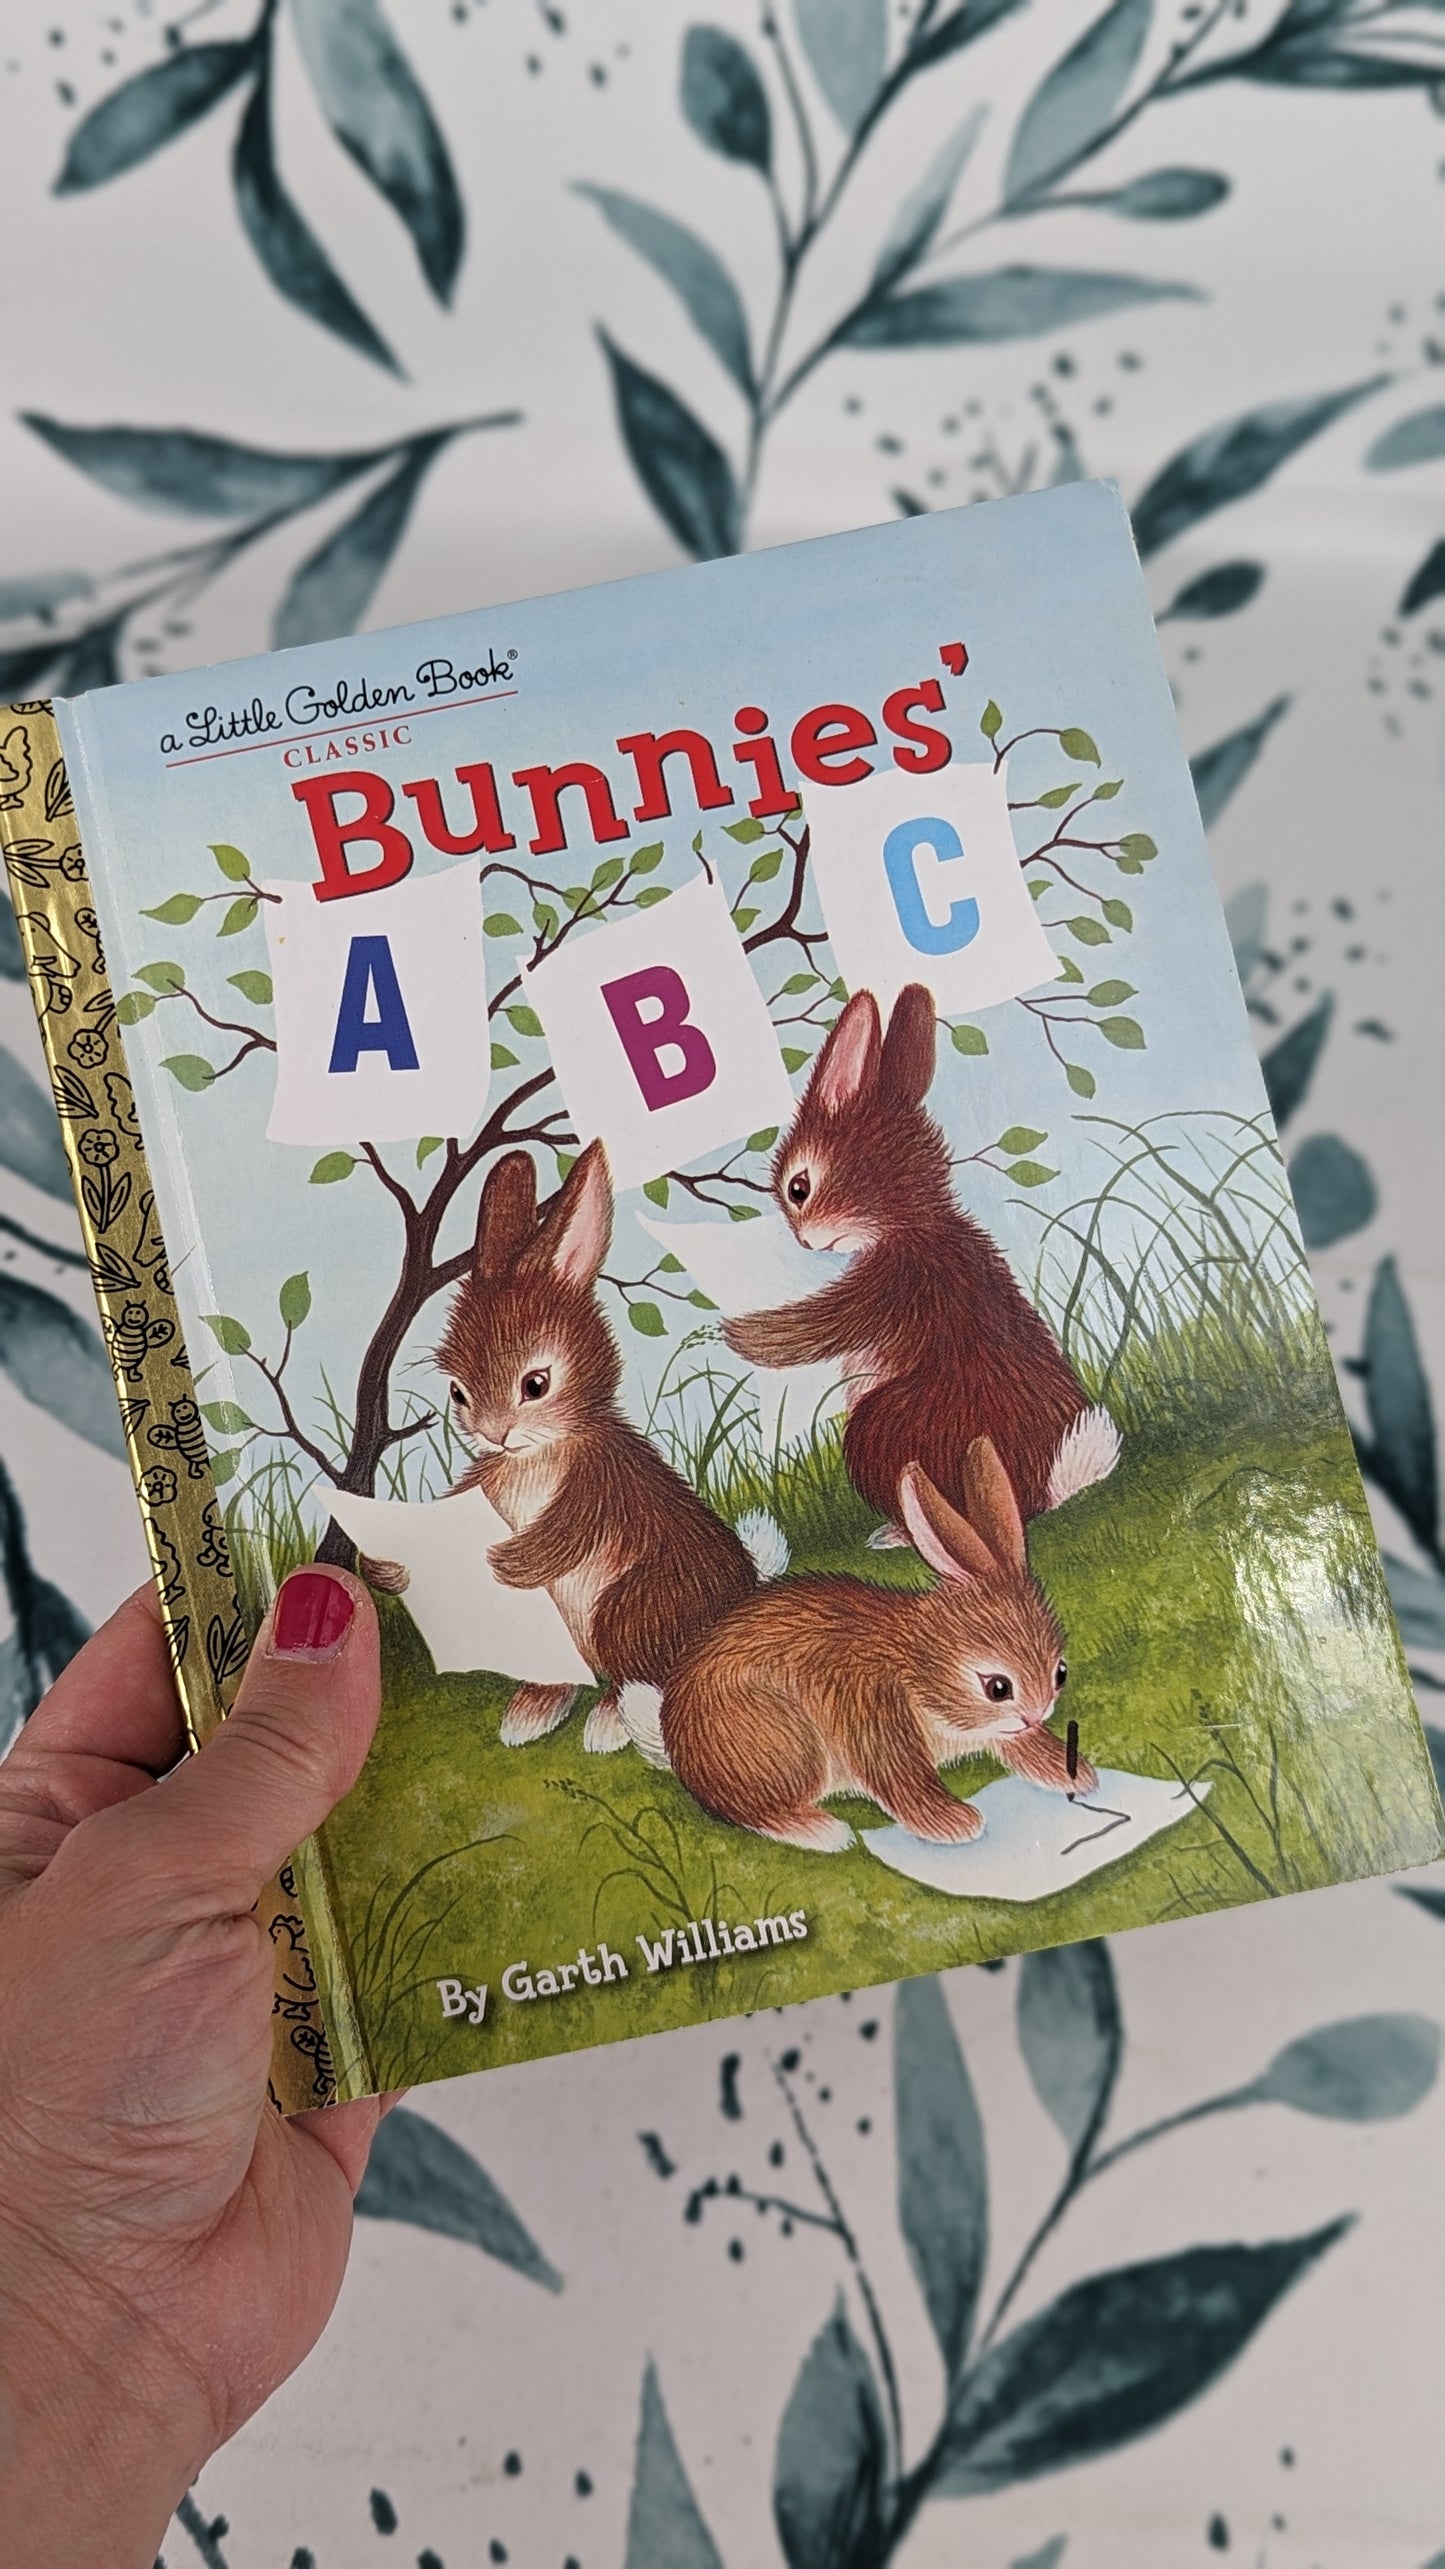 Little Golden Book: Bunnies' ABC (Garth Williams)